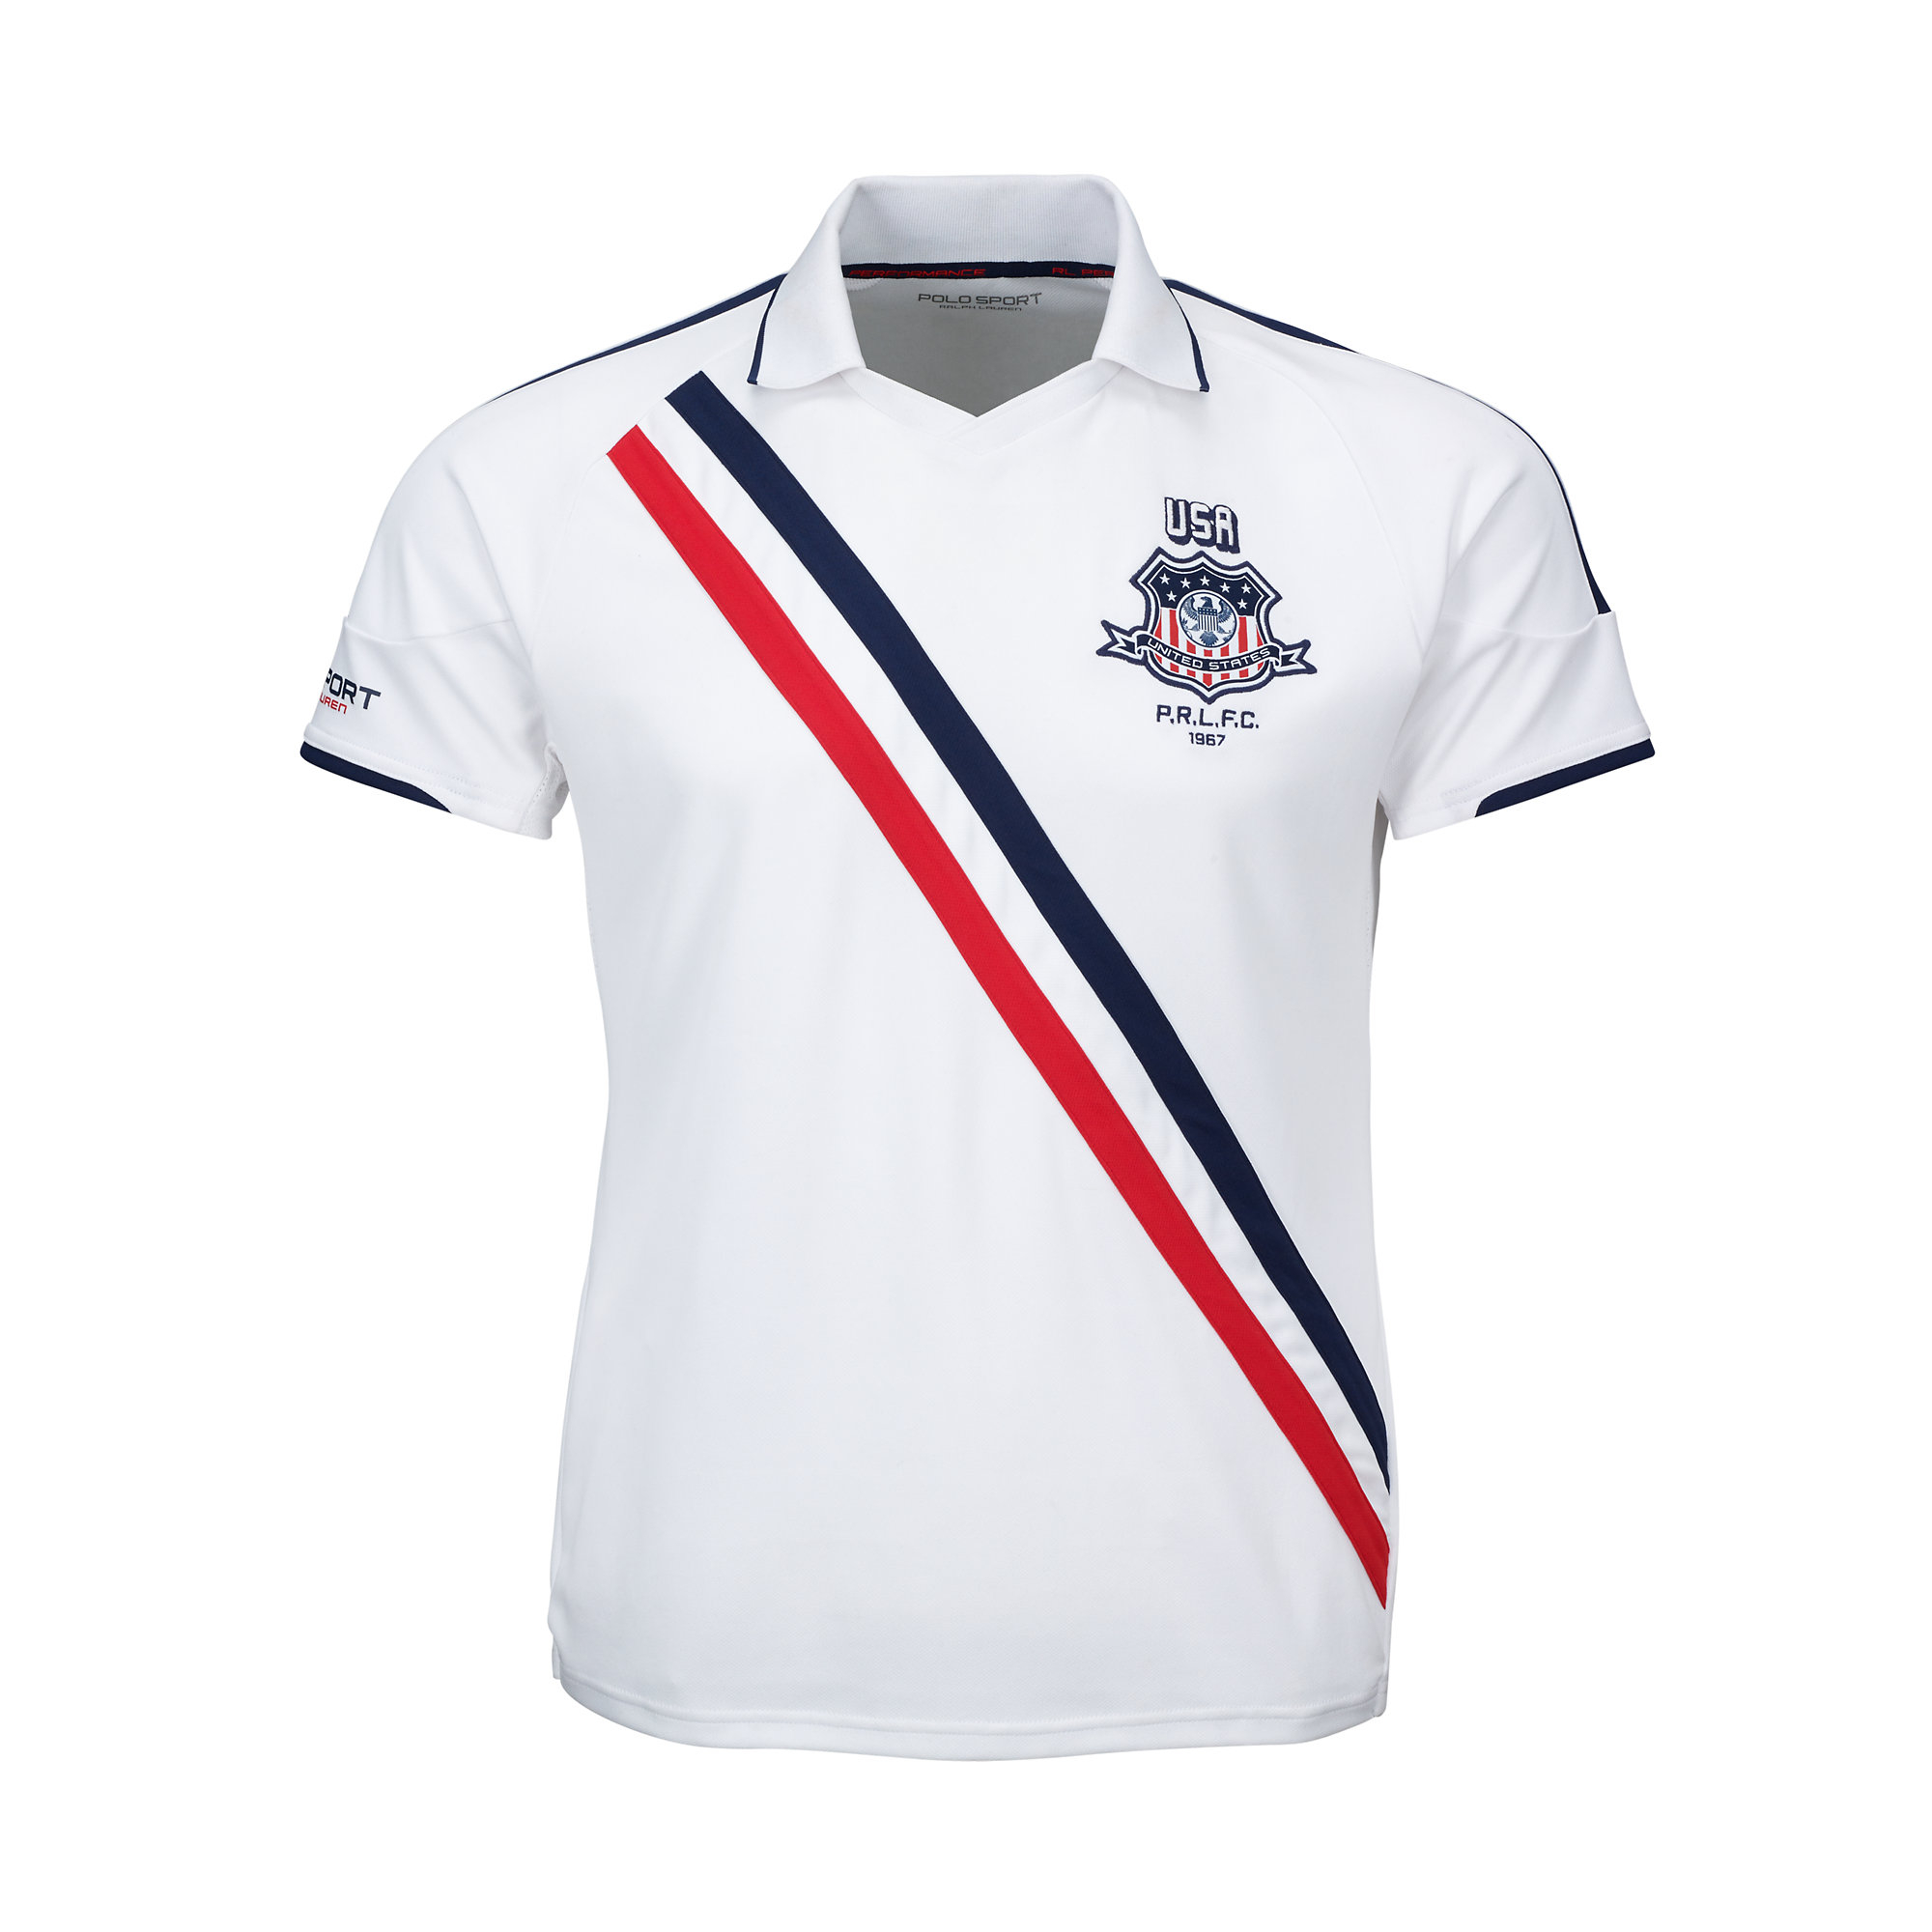 Lyst - Ralph Lauren Usa Jersey Polo Shirt in White for Men